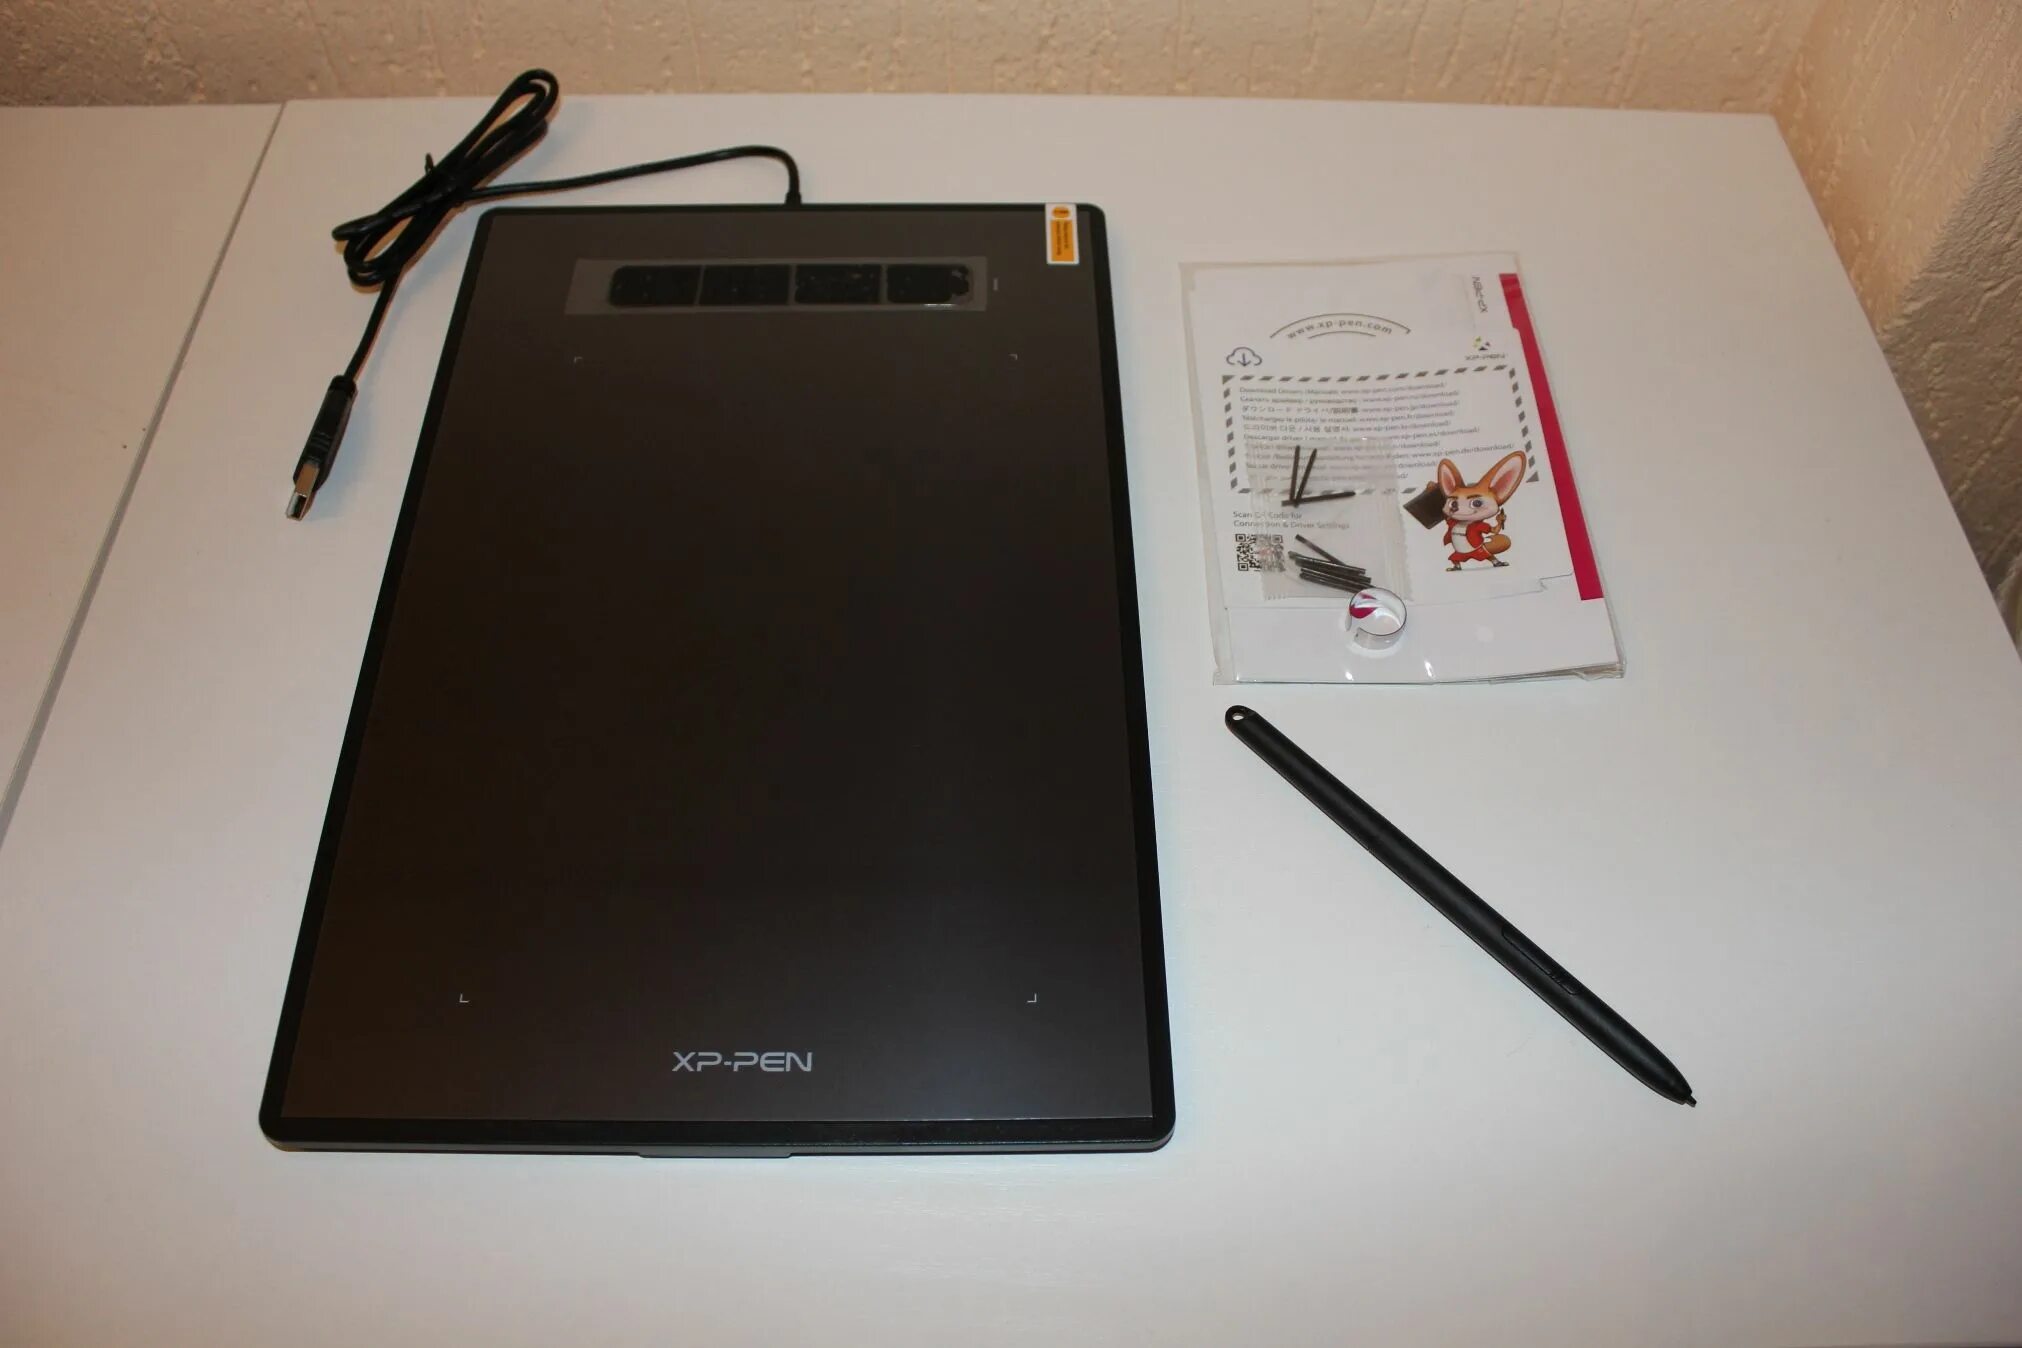 Планшет xp pen g960. XP-Pen Star g960. Графический планшет XP-Pen g960. Графический планшет XP Pen Star 960. Графический планшет XPPEN Star g4305.